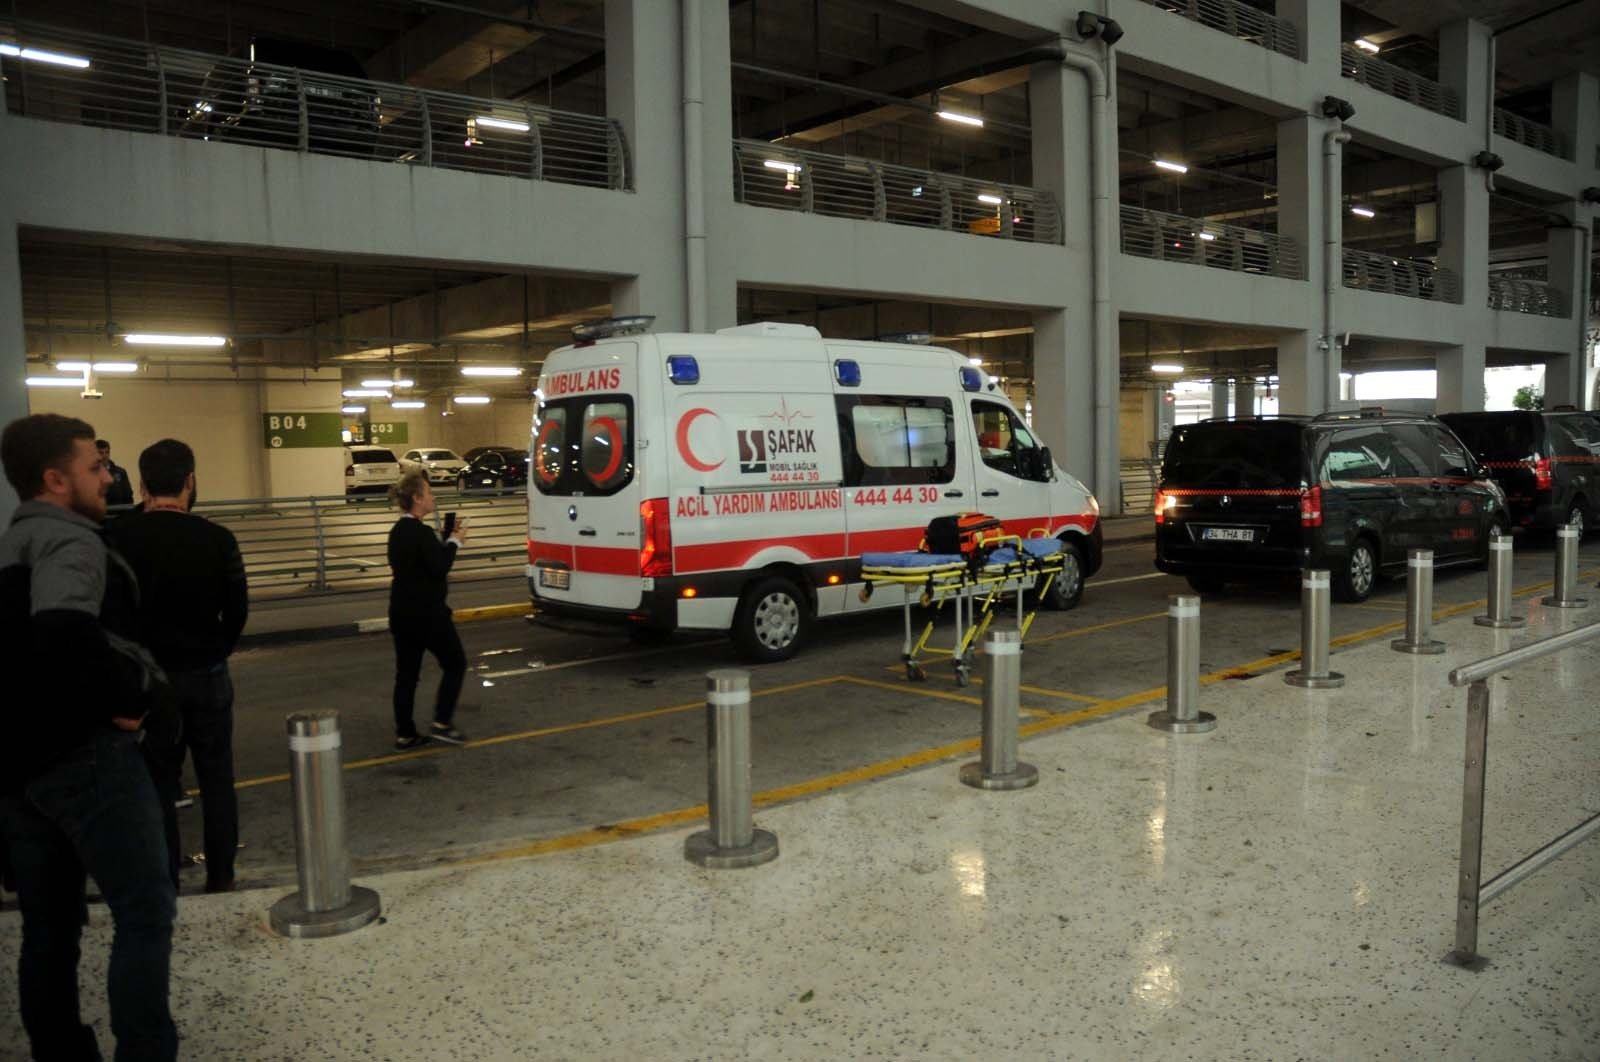 An ambulance at the scene, Istanbul International Airport, Istanbul, Türkiye, Nov. 21, 2022. (DHA Photo)